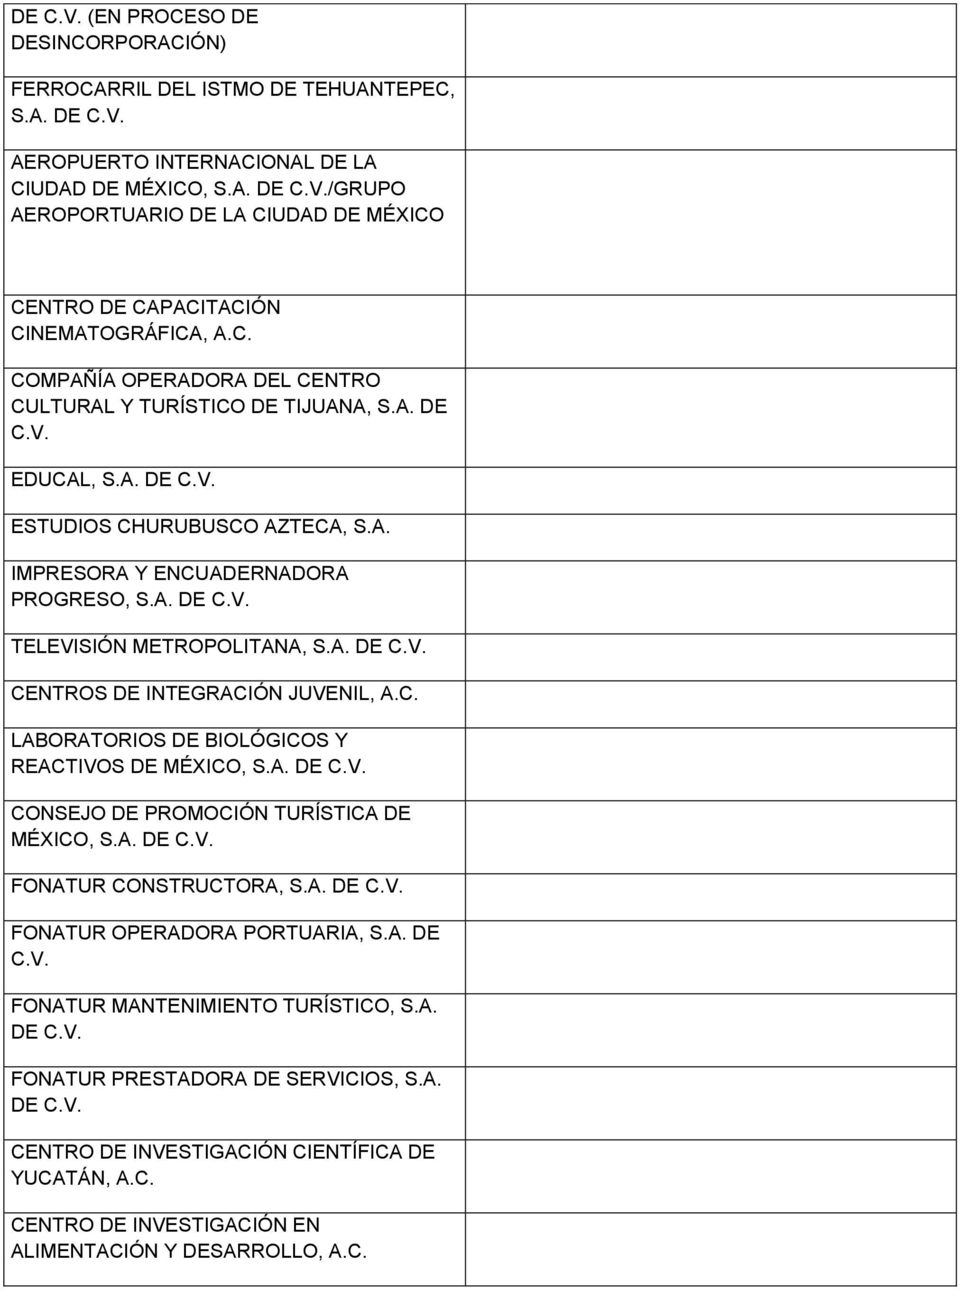 A. DE C.V. CENTROS DE INTEGRACIÓN JUVENIL, A.C. LABORATORIOS DE BIOLÓGICOS Y REACTIVOS DE MÉXICO, S.A. DE C.V. CONSEJO DE PROMOCIÓN TURÍSTICA DE MÉXICO, S.A. DE C.V. FONATUR CONSTRUCTORA, S.A. DE C.V. FONATUR OPERADORA PORTUARIA, S.